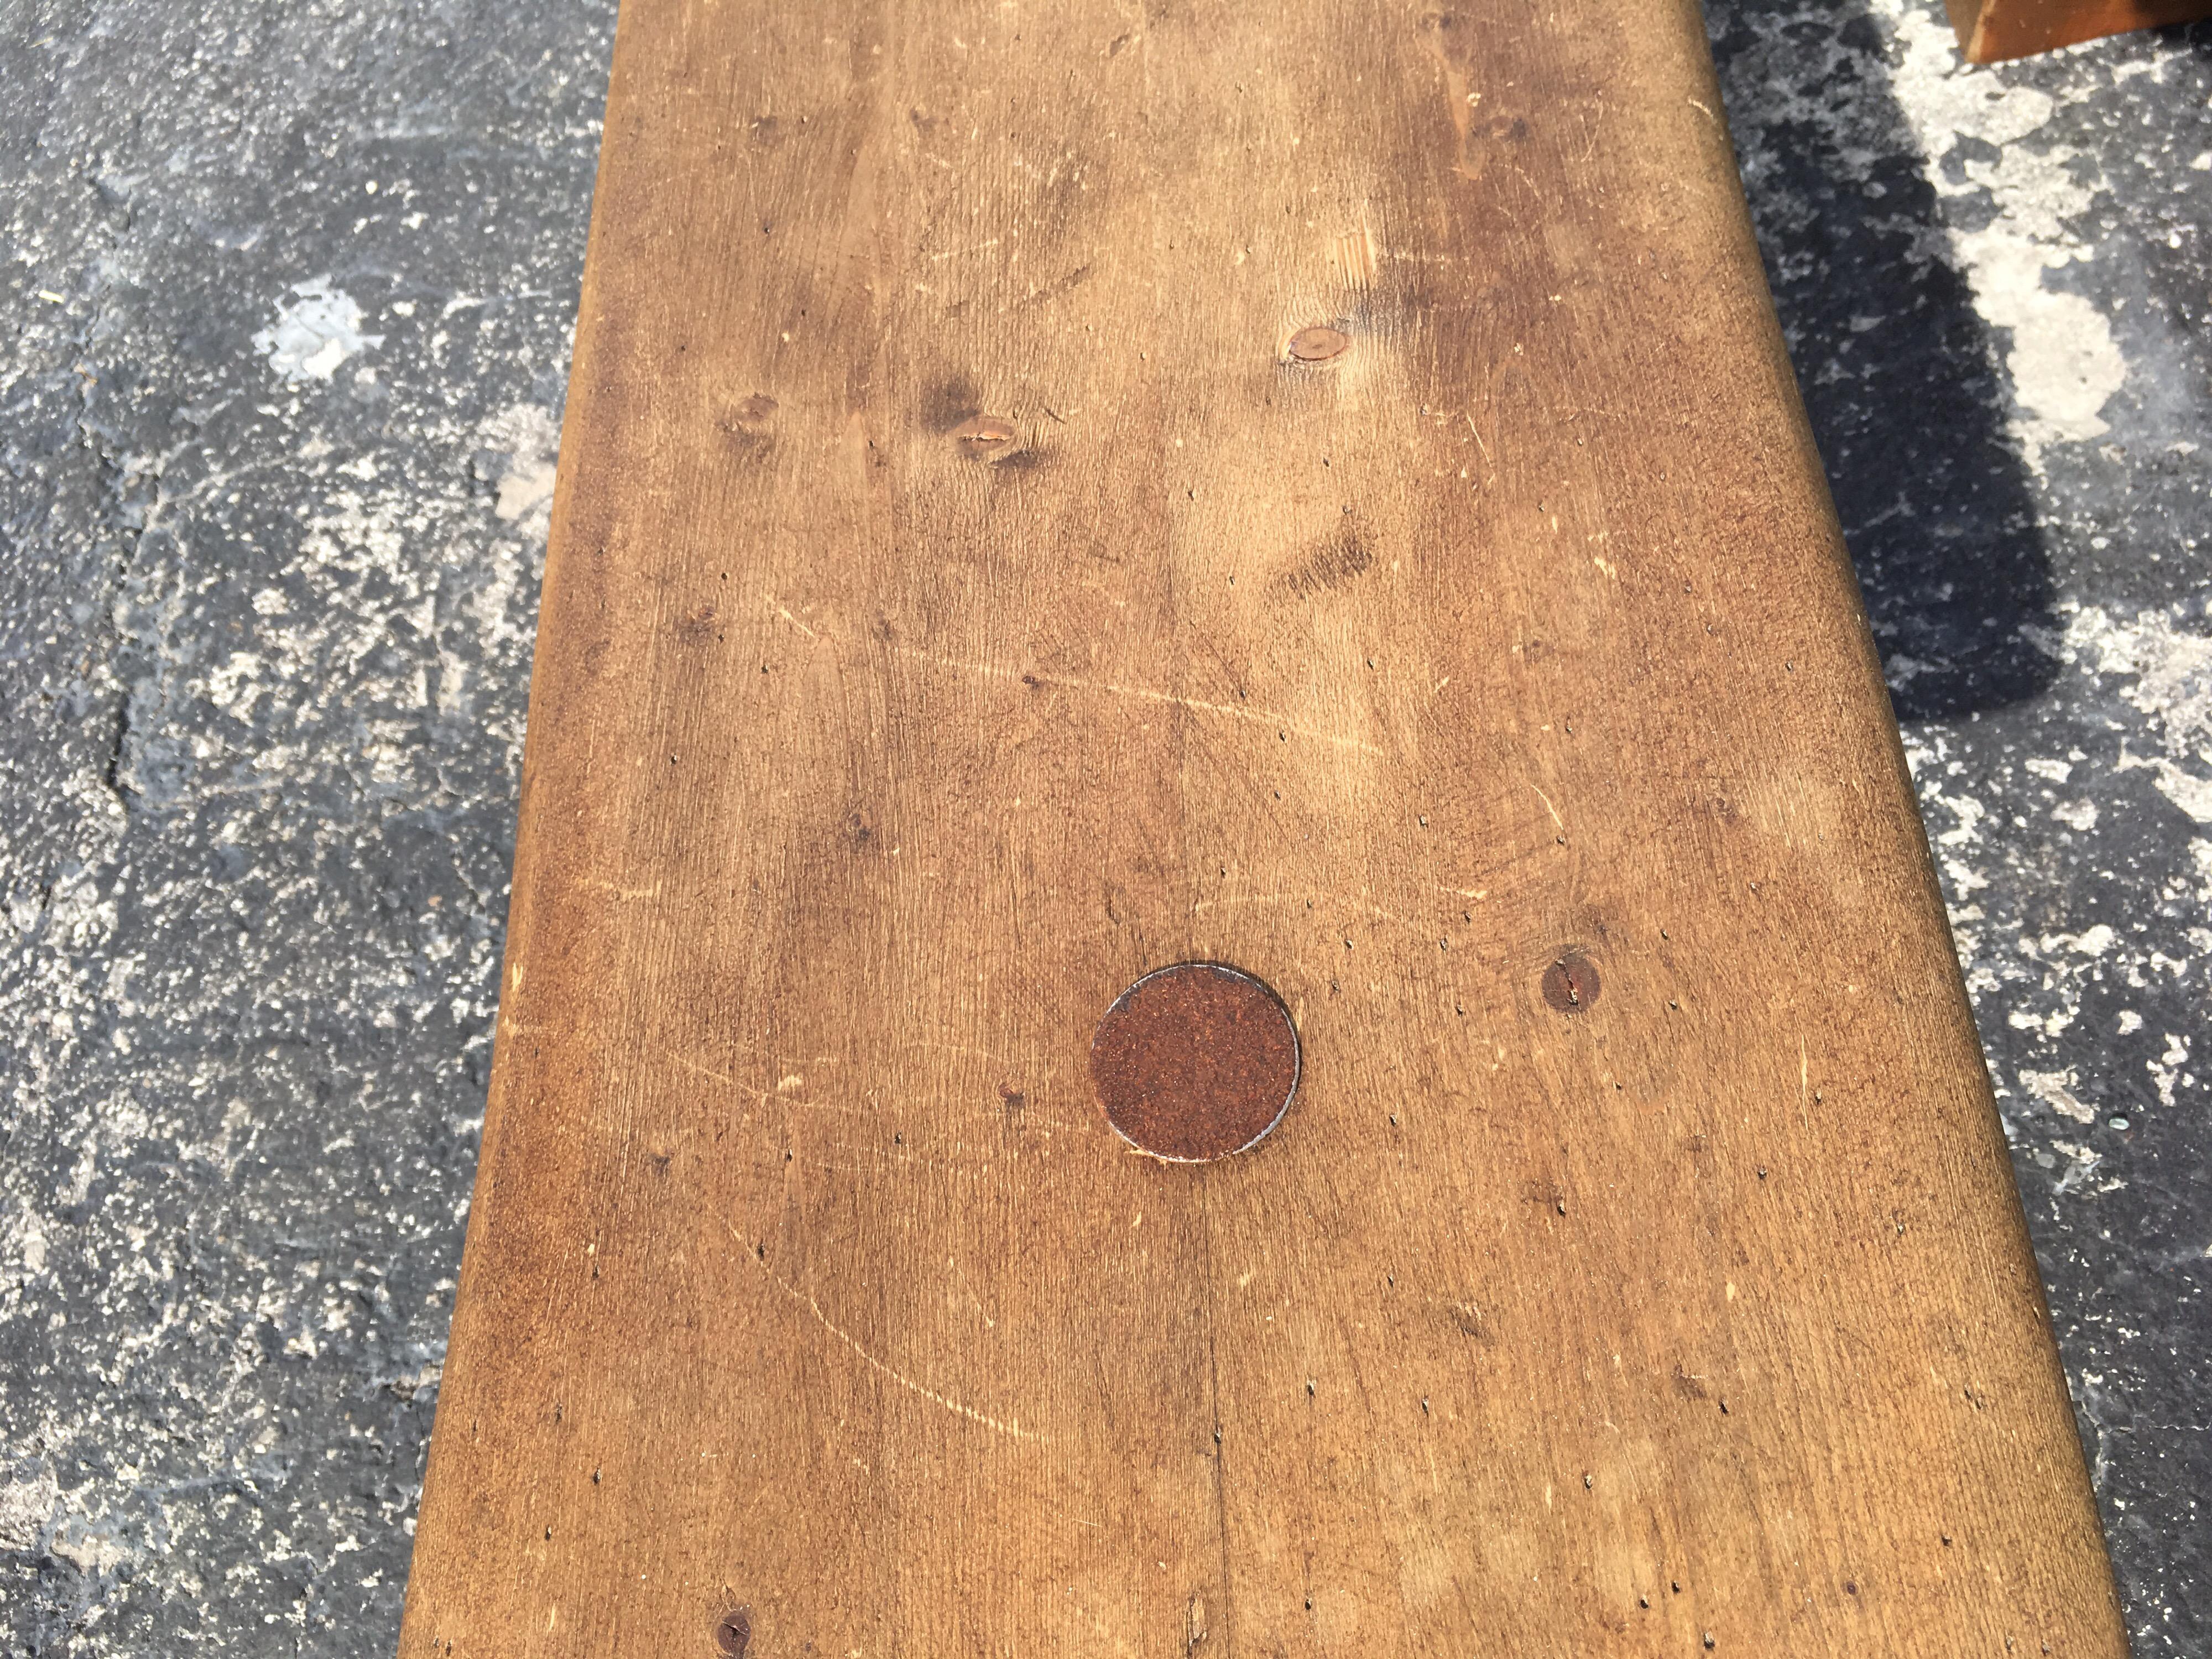 Metal Pair of Benches, Industrial, Farm, Rustic, Wood, Brown